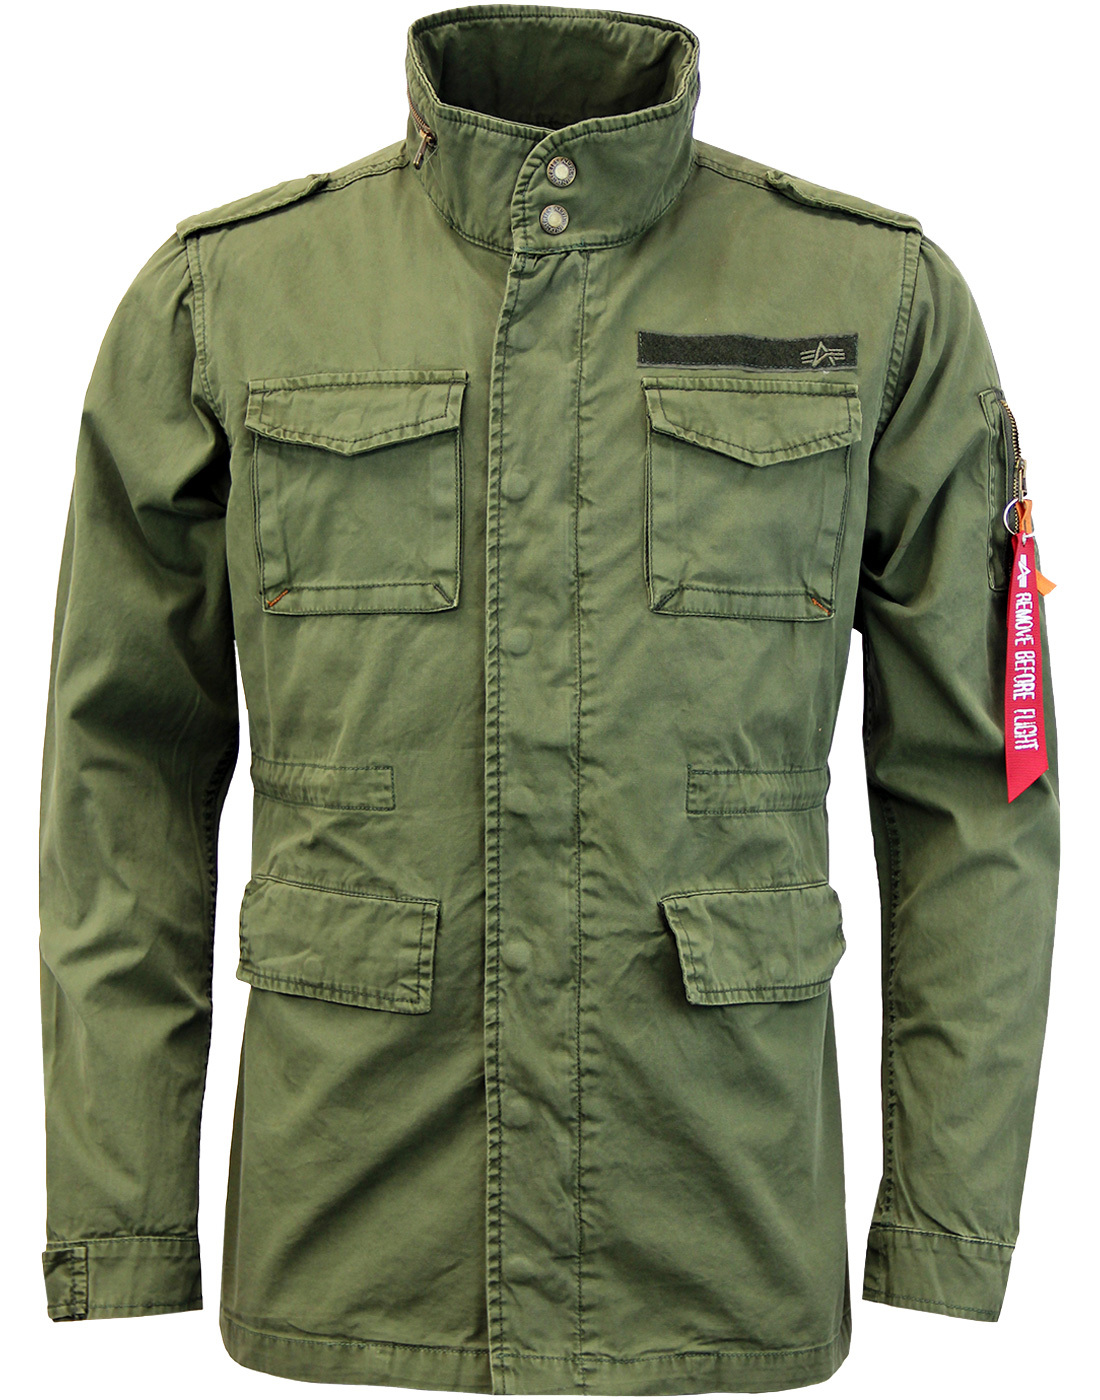 Huntington ALPHA INDUSTRIES Military Field Jacket